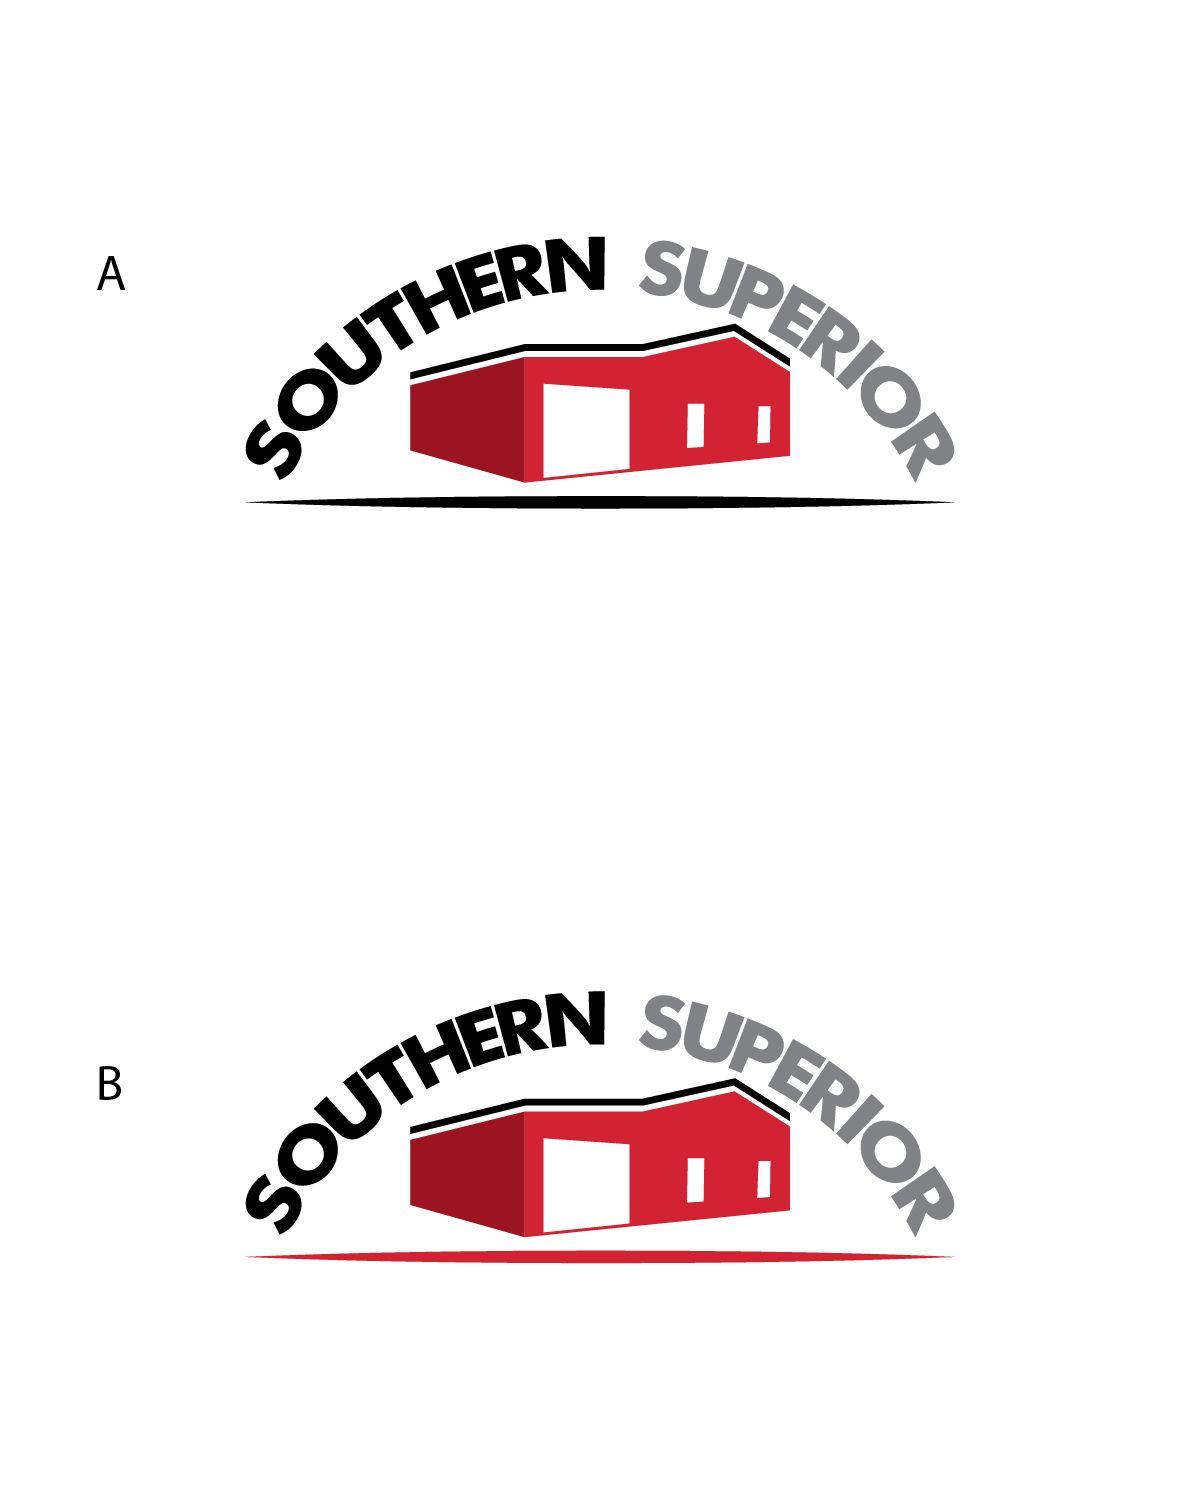 Black Arrow Logo - Upmarket, Bold, Construction Company Logo Design for Southern